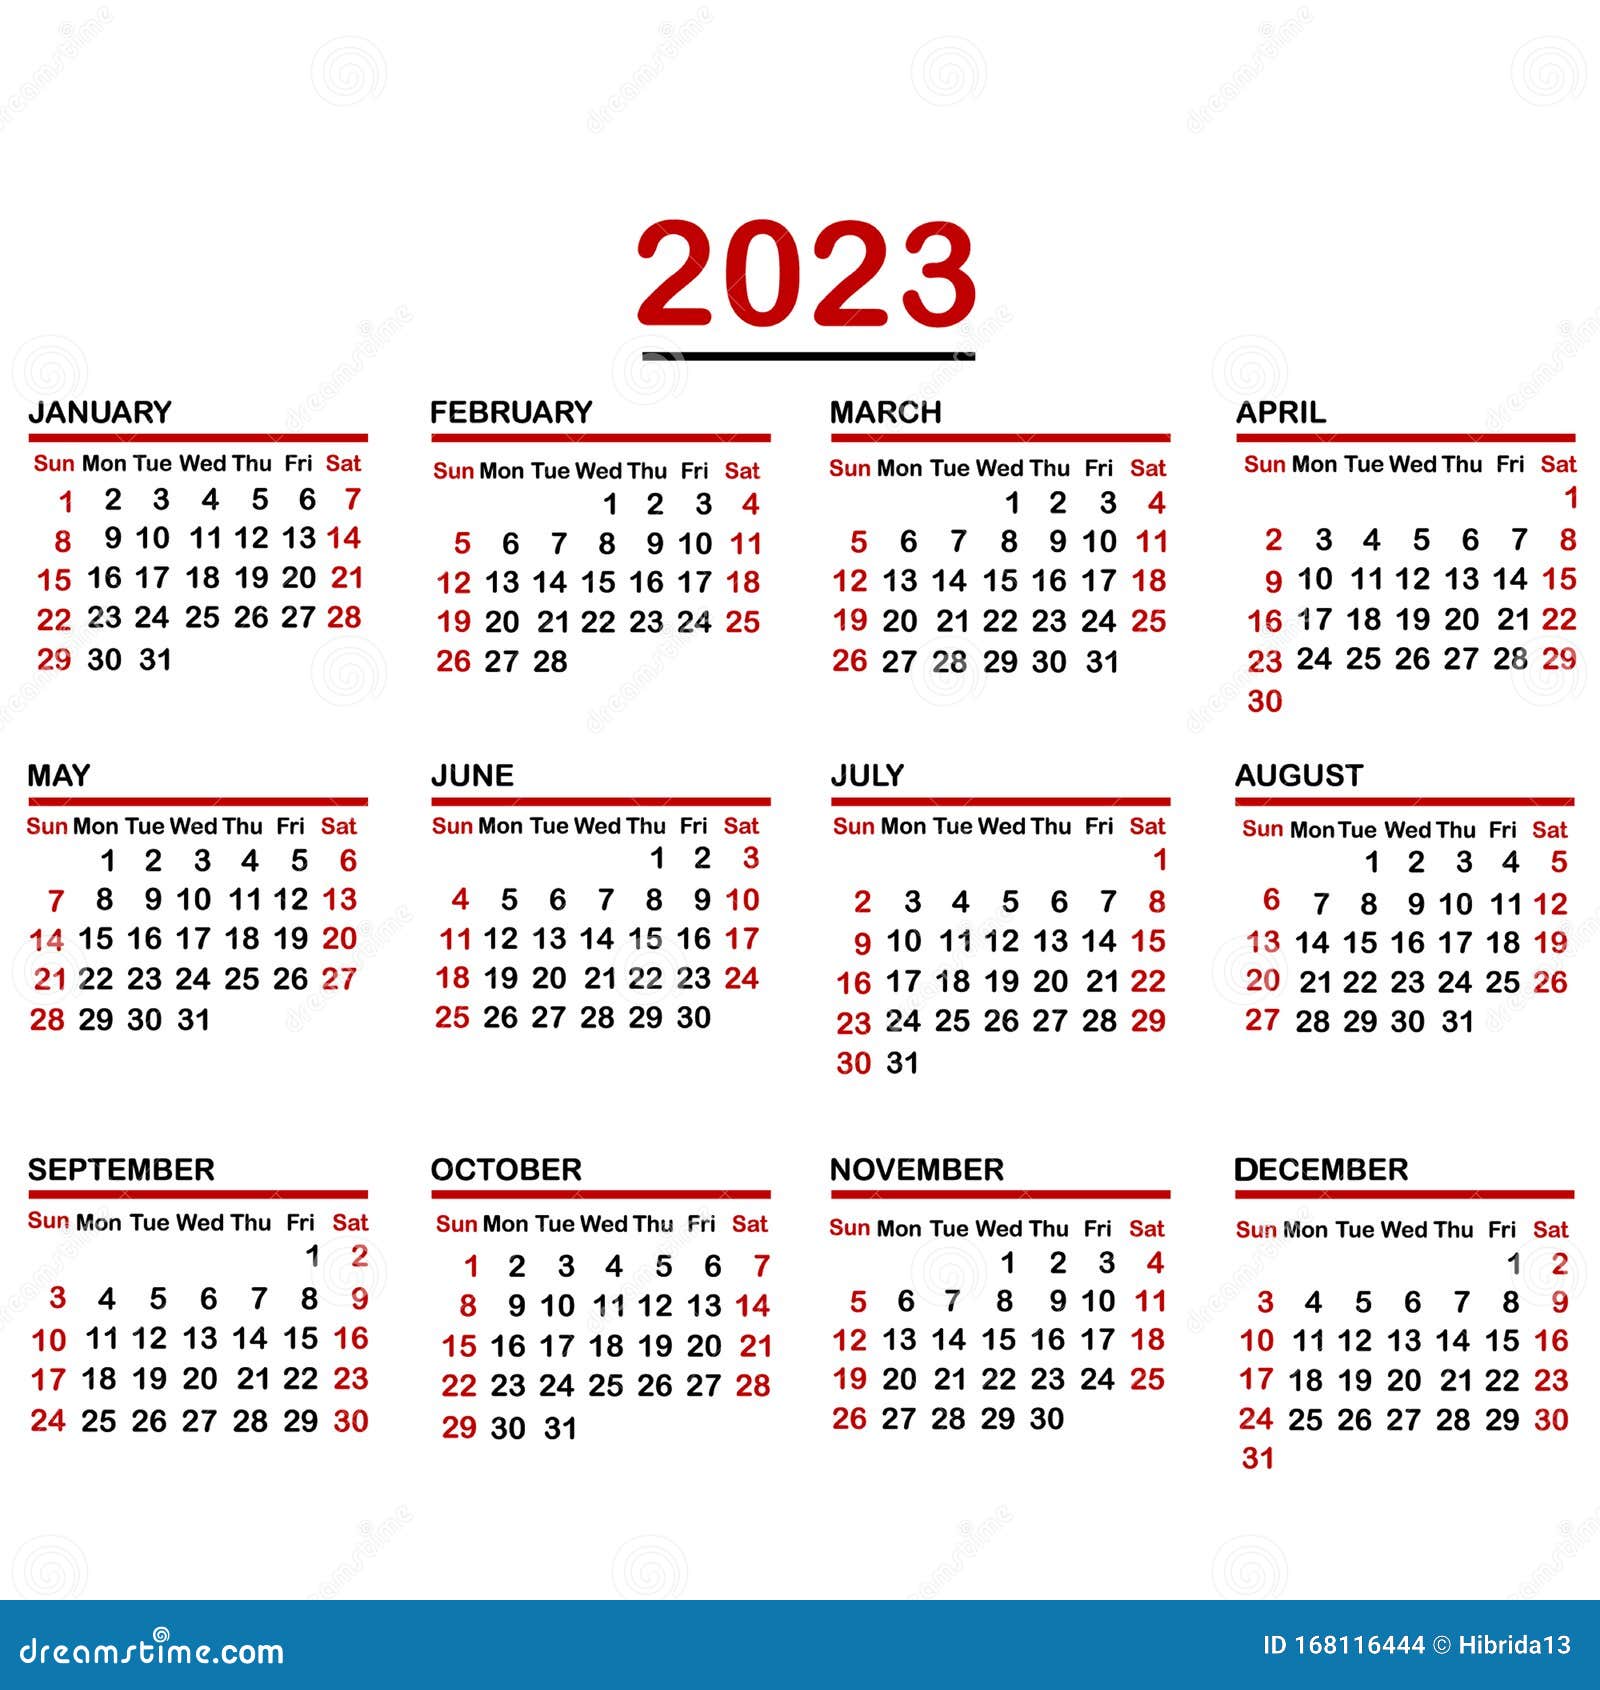 www-timeanddate-calendar-2023-customize-and-print